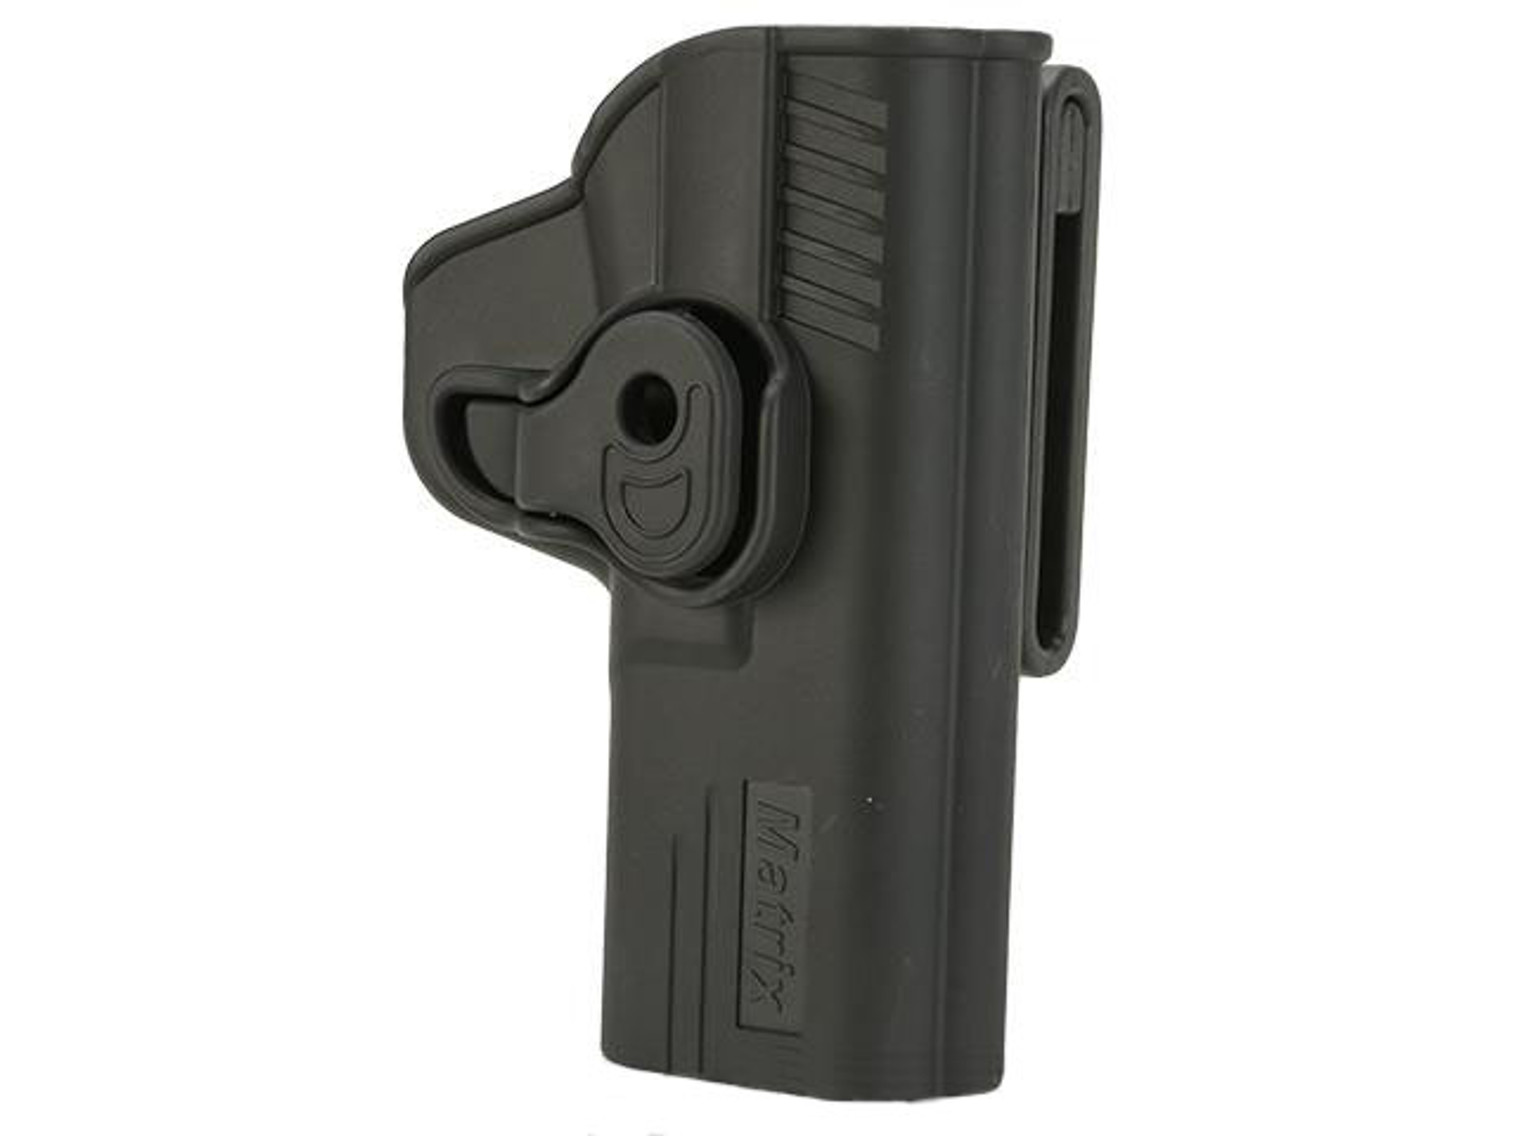 Matrix Hardshell Adjustable Holster for S&W M&P9 Series Pistols (Mount: Belt Attachment)